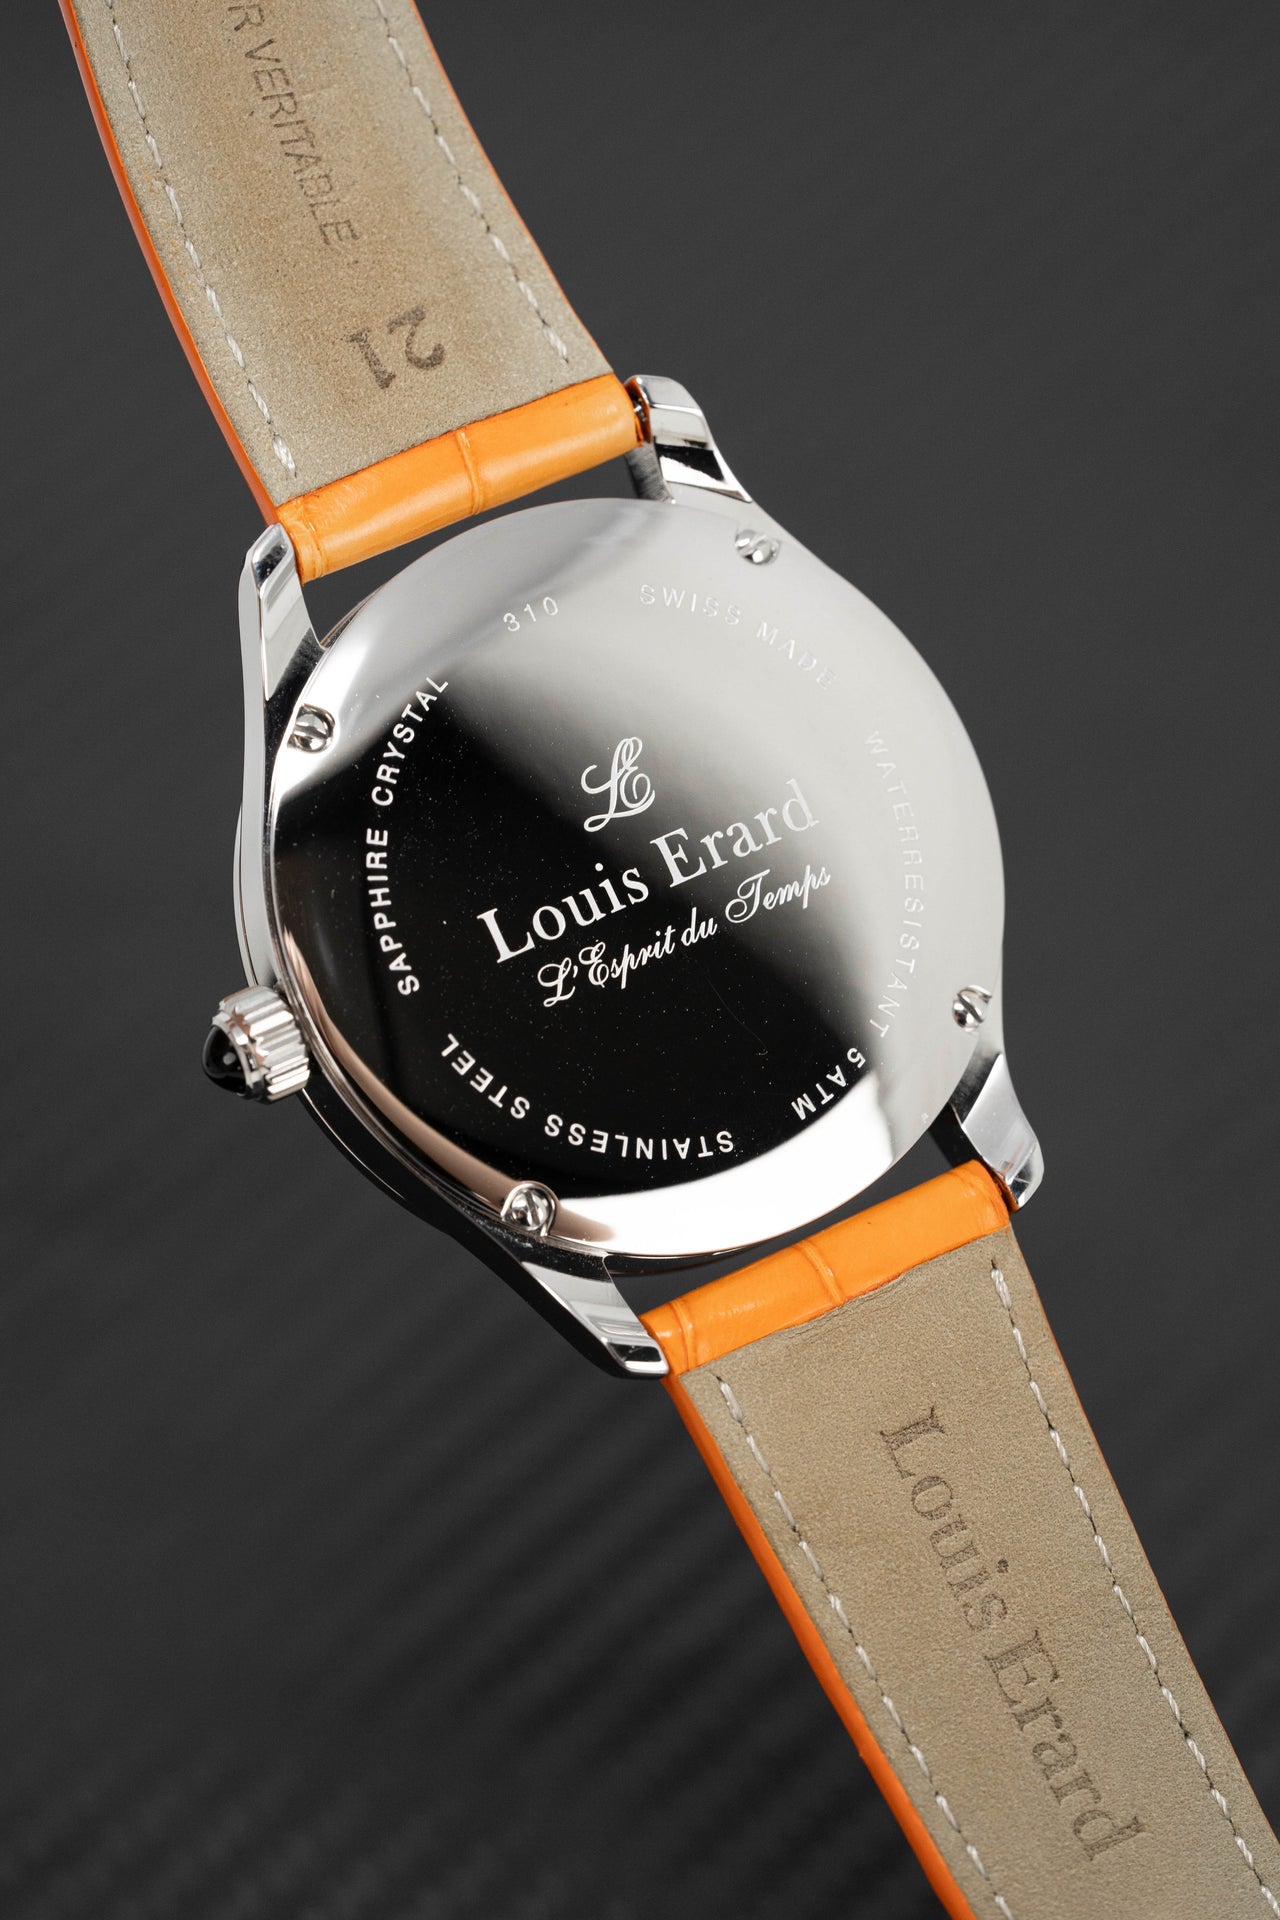 Louis Erard Watch Men's Automatic Emotion Diamond Orange 92310SE01.BDA04